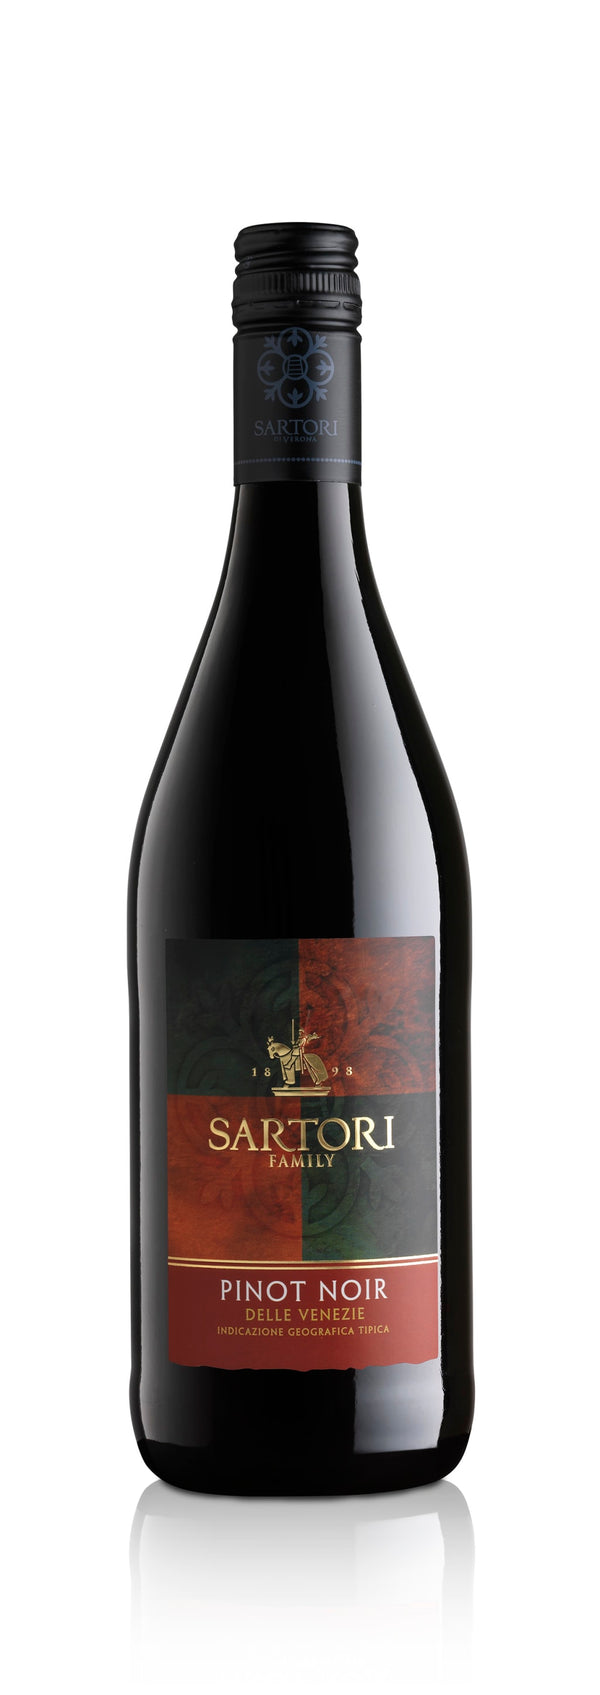 Sartori "Family" Pinot Noir